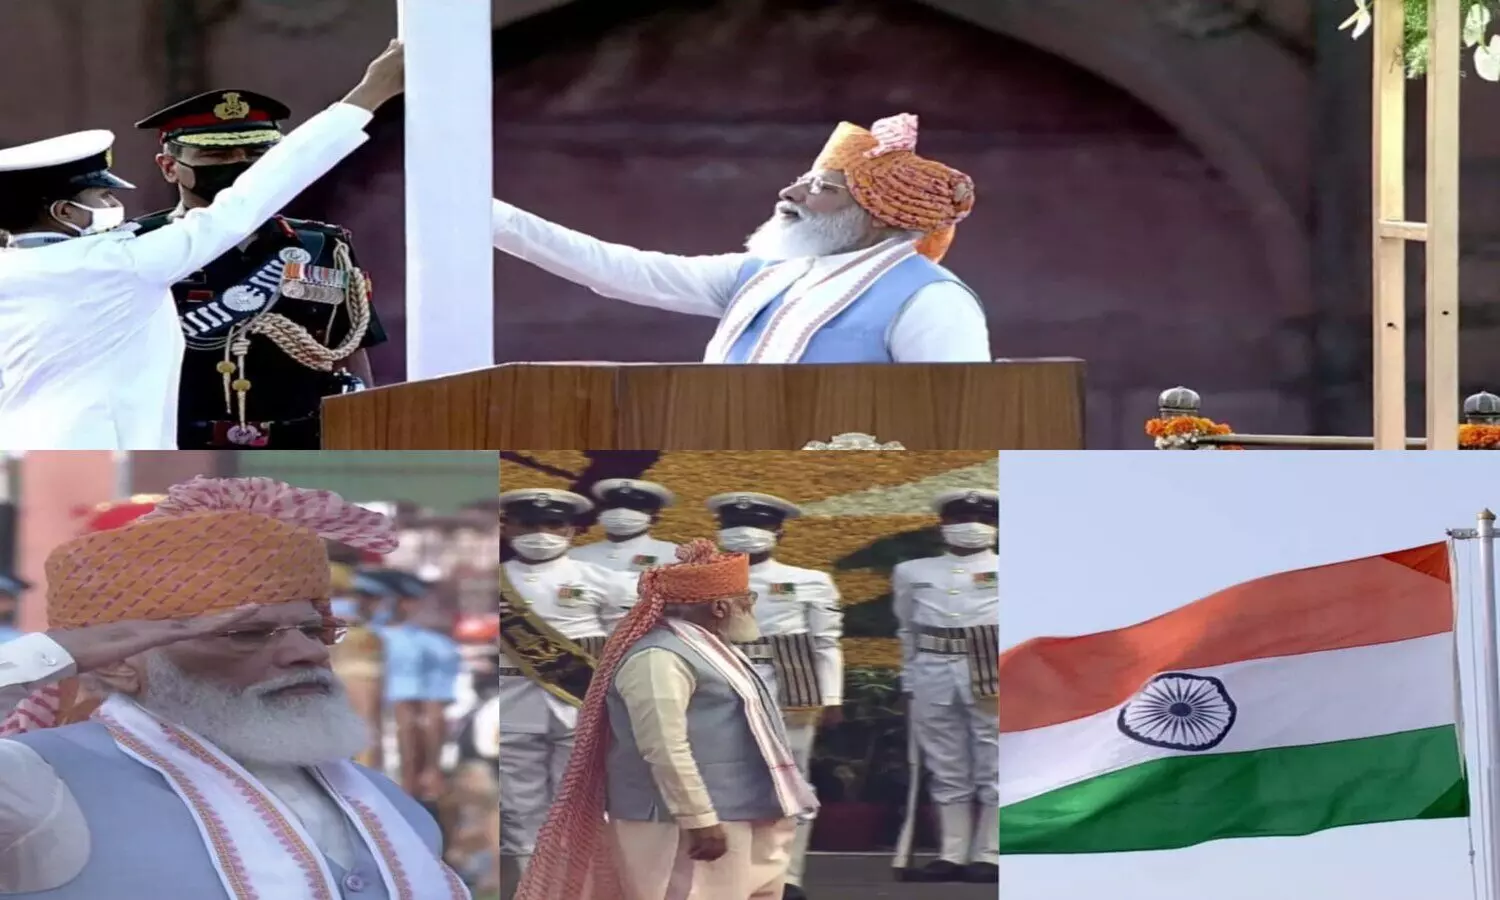 PM Modi unfurling the national flag